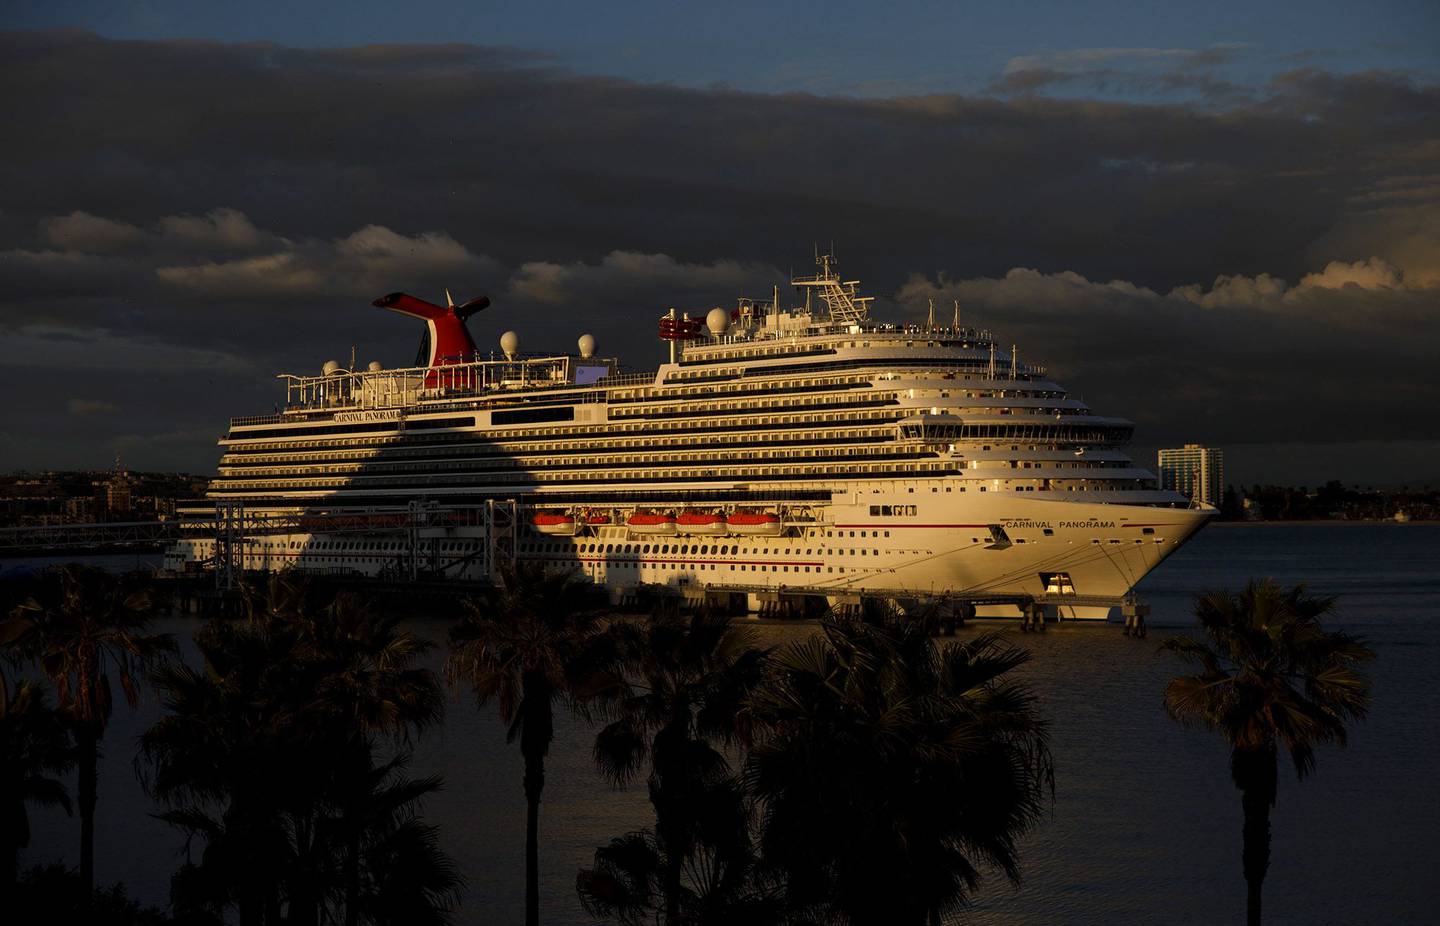 Carnival's cruise ship Panorama docking at Long Beach, California.dfd